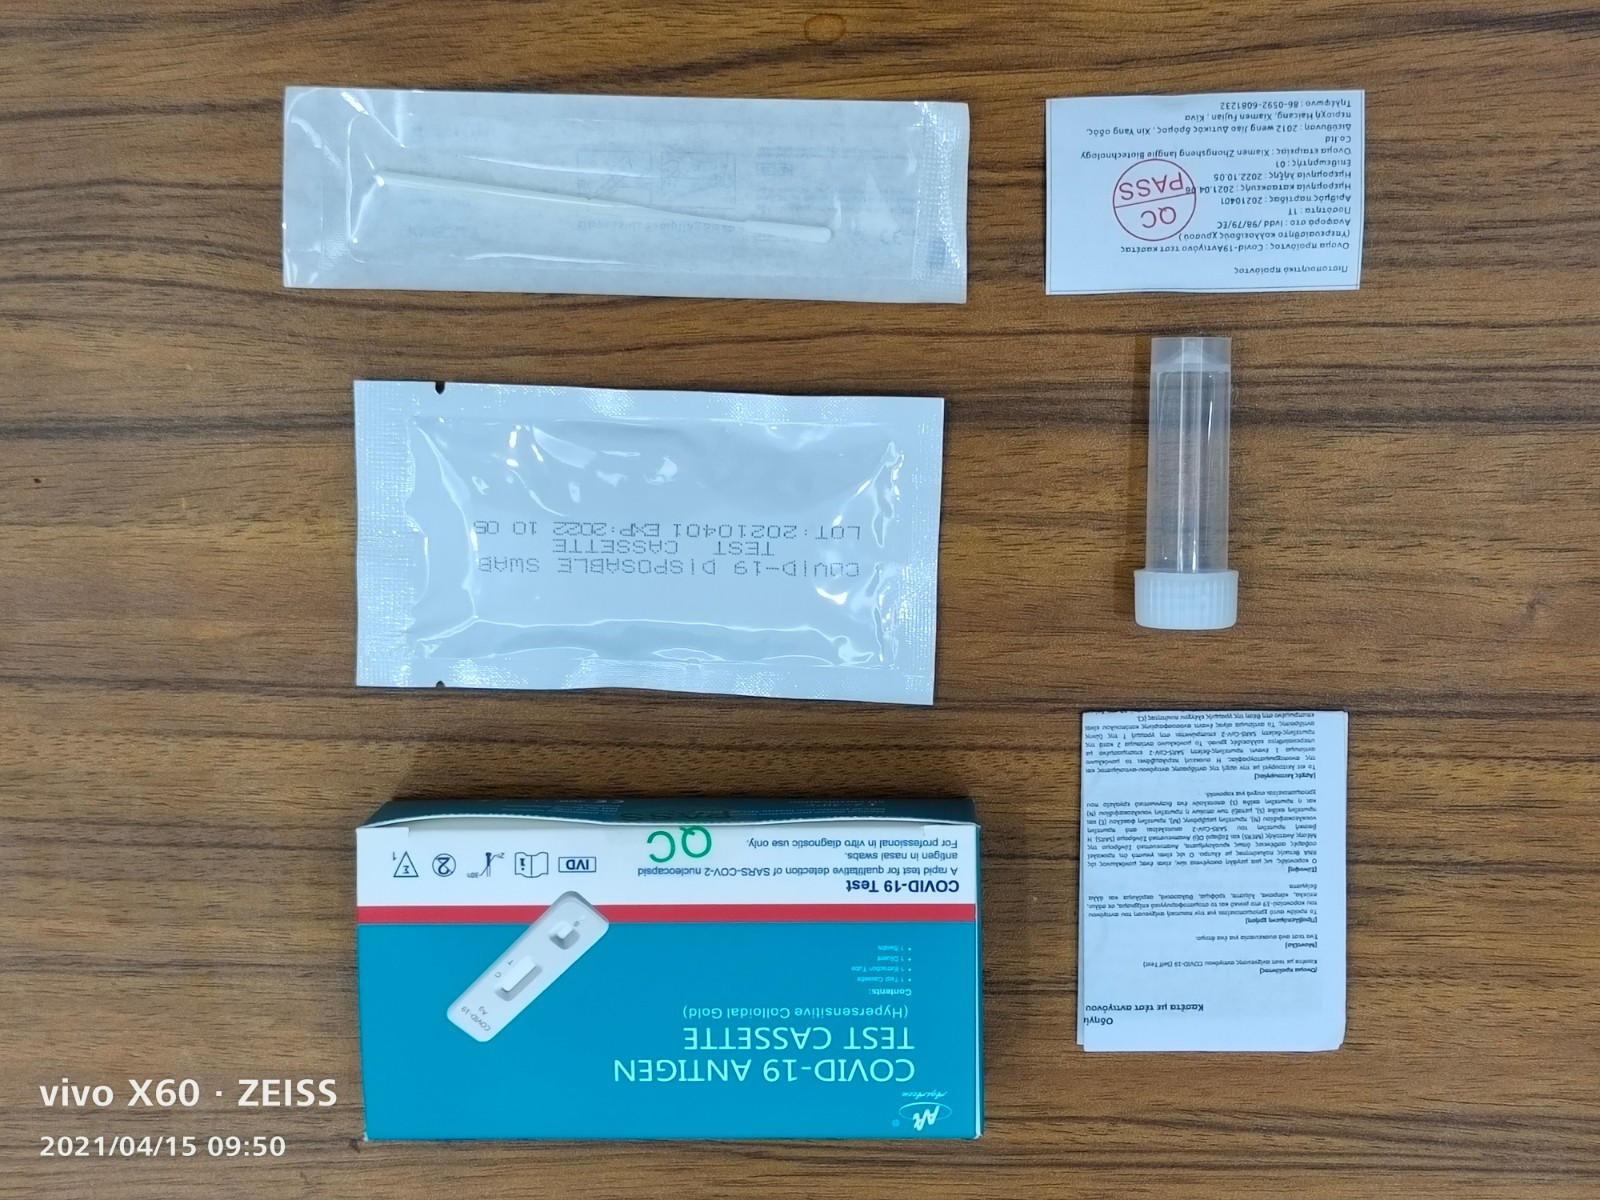 COVID-19 Antigen Test Cassette(hypersensitive colloidal gold)